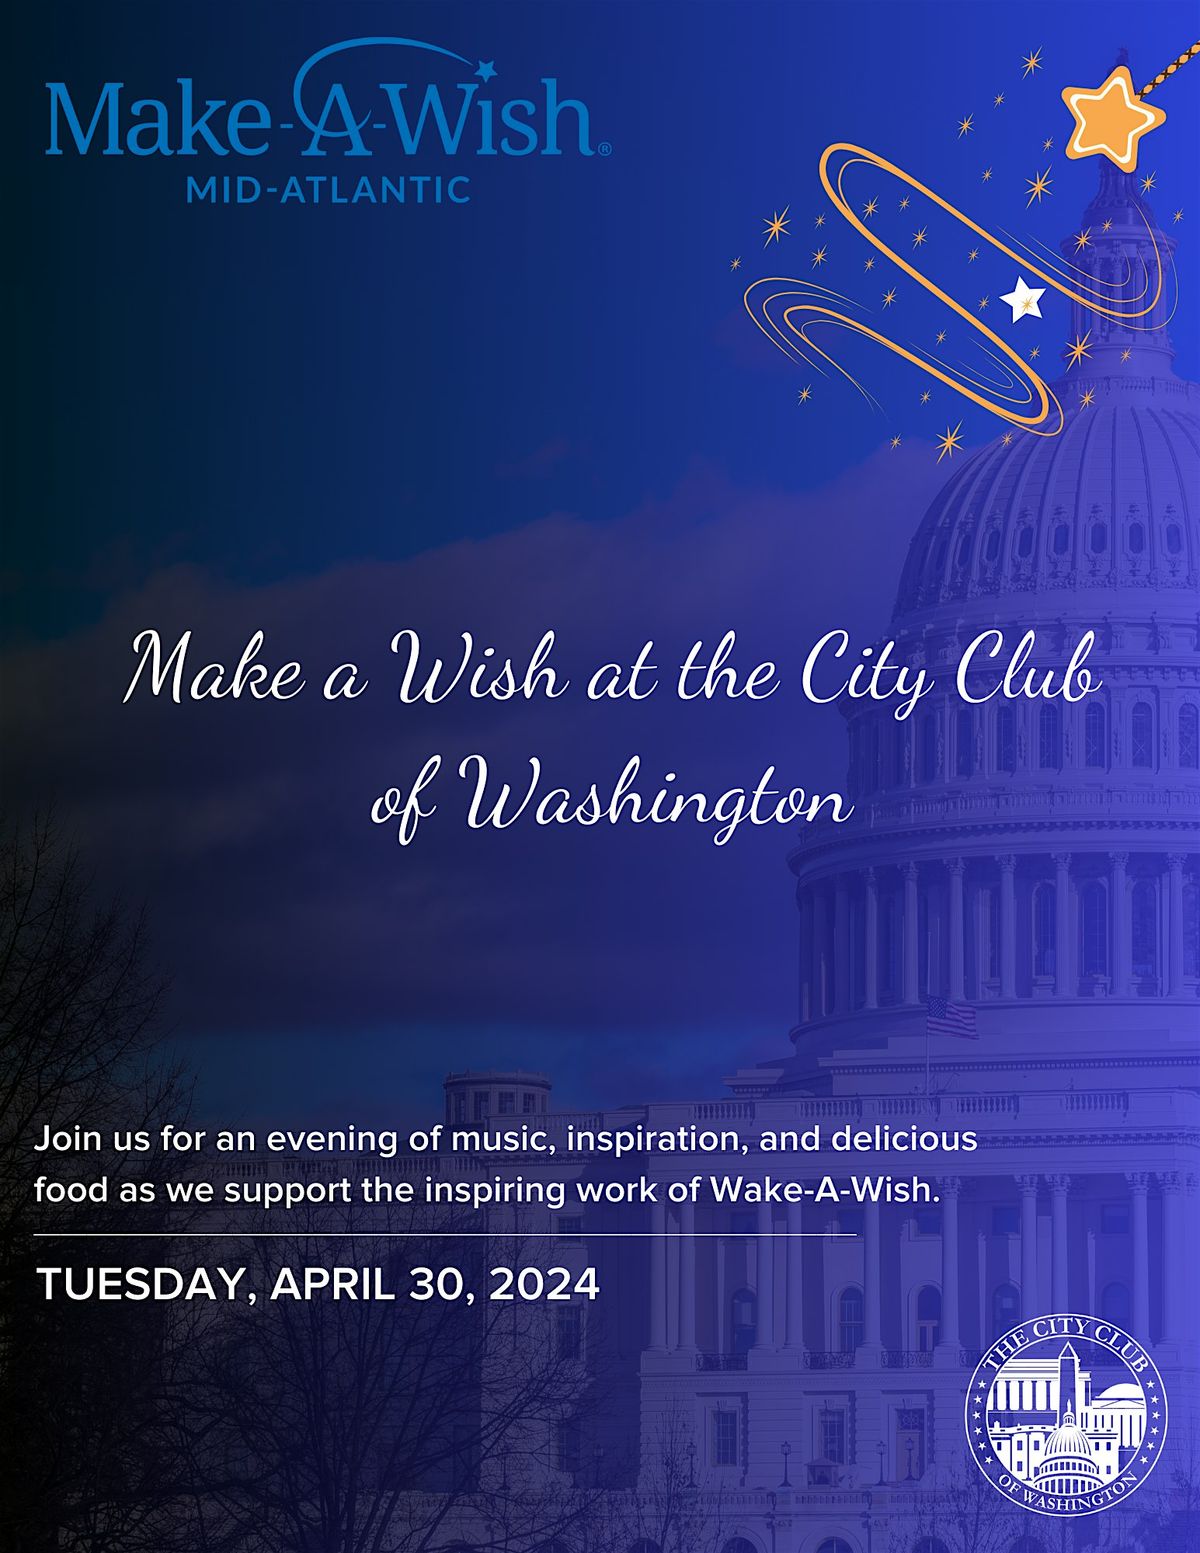 Make a Wish with City Club of Washington